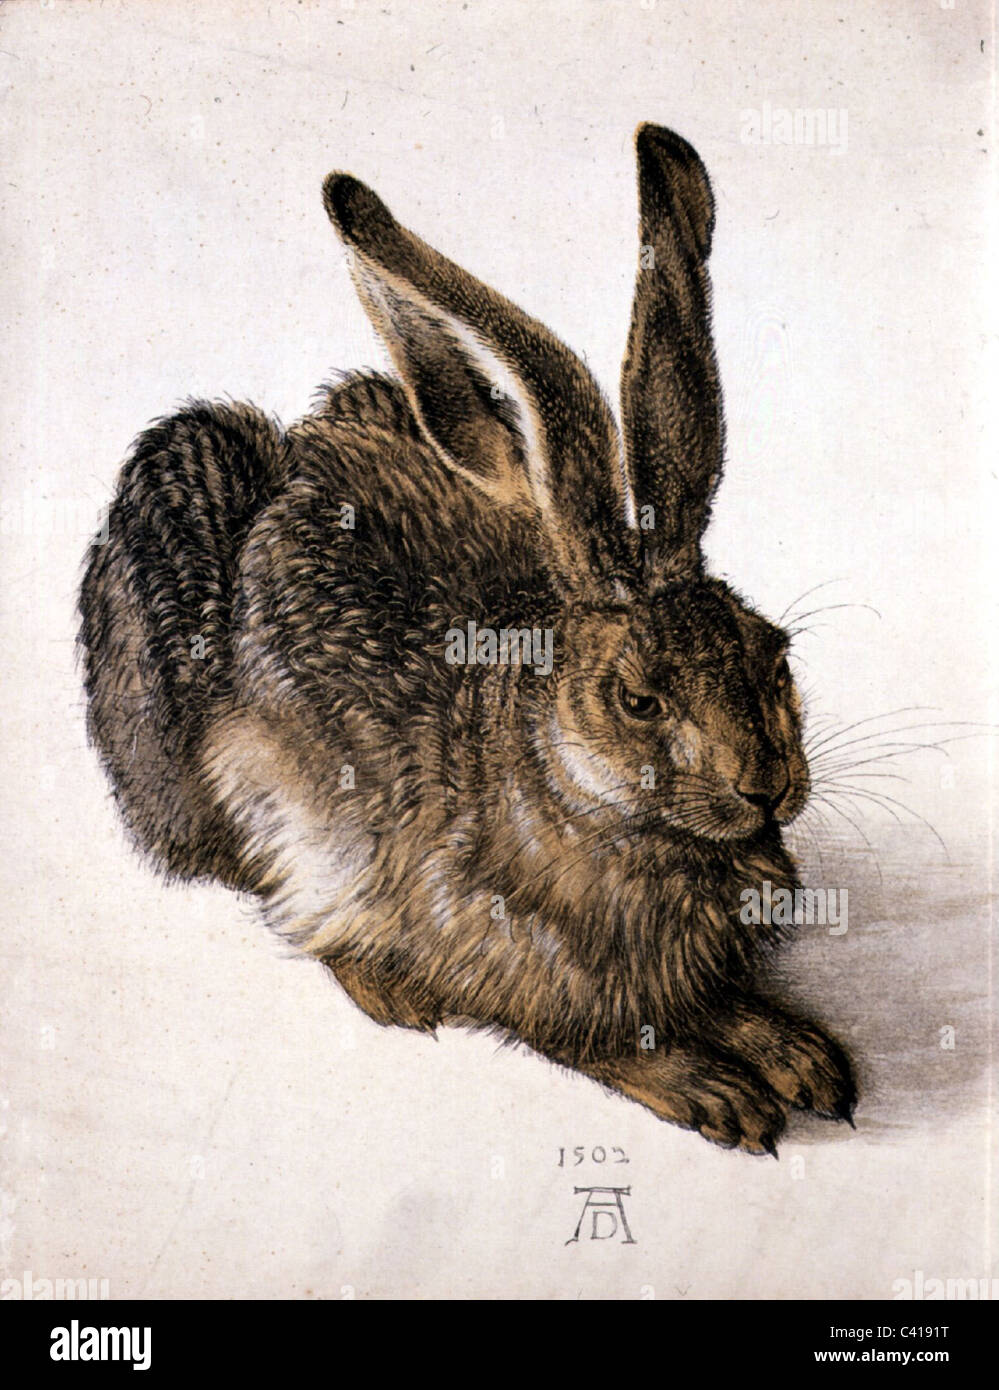 fine arts, Duerer, Albrecht (1471 - 1528), 'Feldhase' (Young Hare), watercolour, 1502, Albertina, Vienna, Austria, zoology, hare Stock Photo